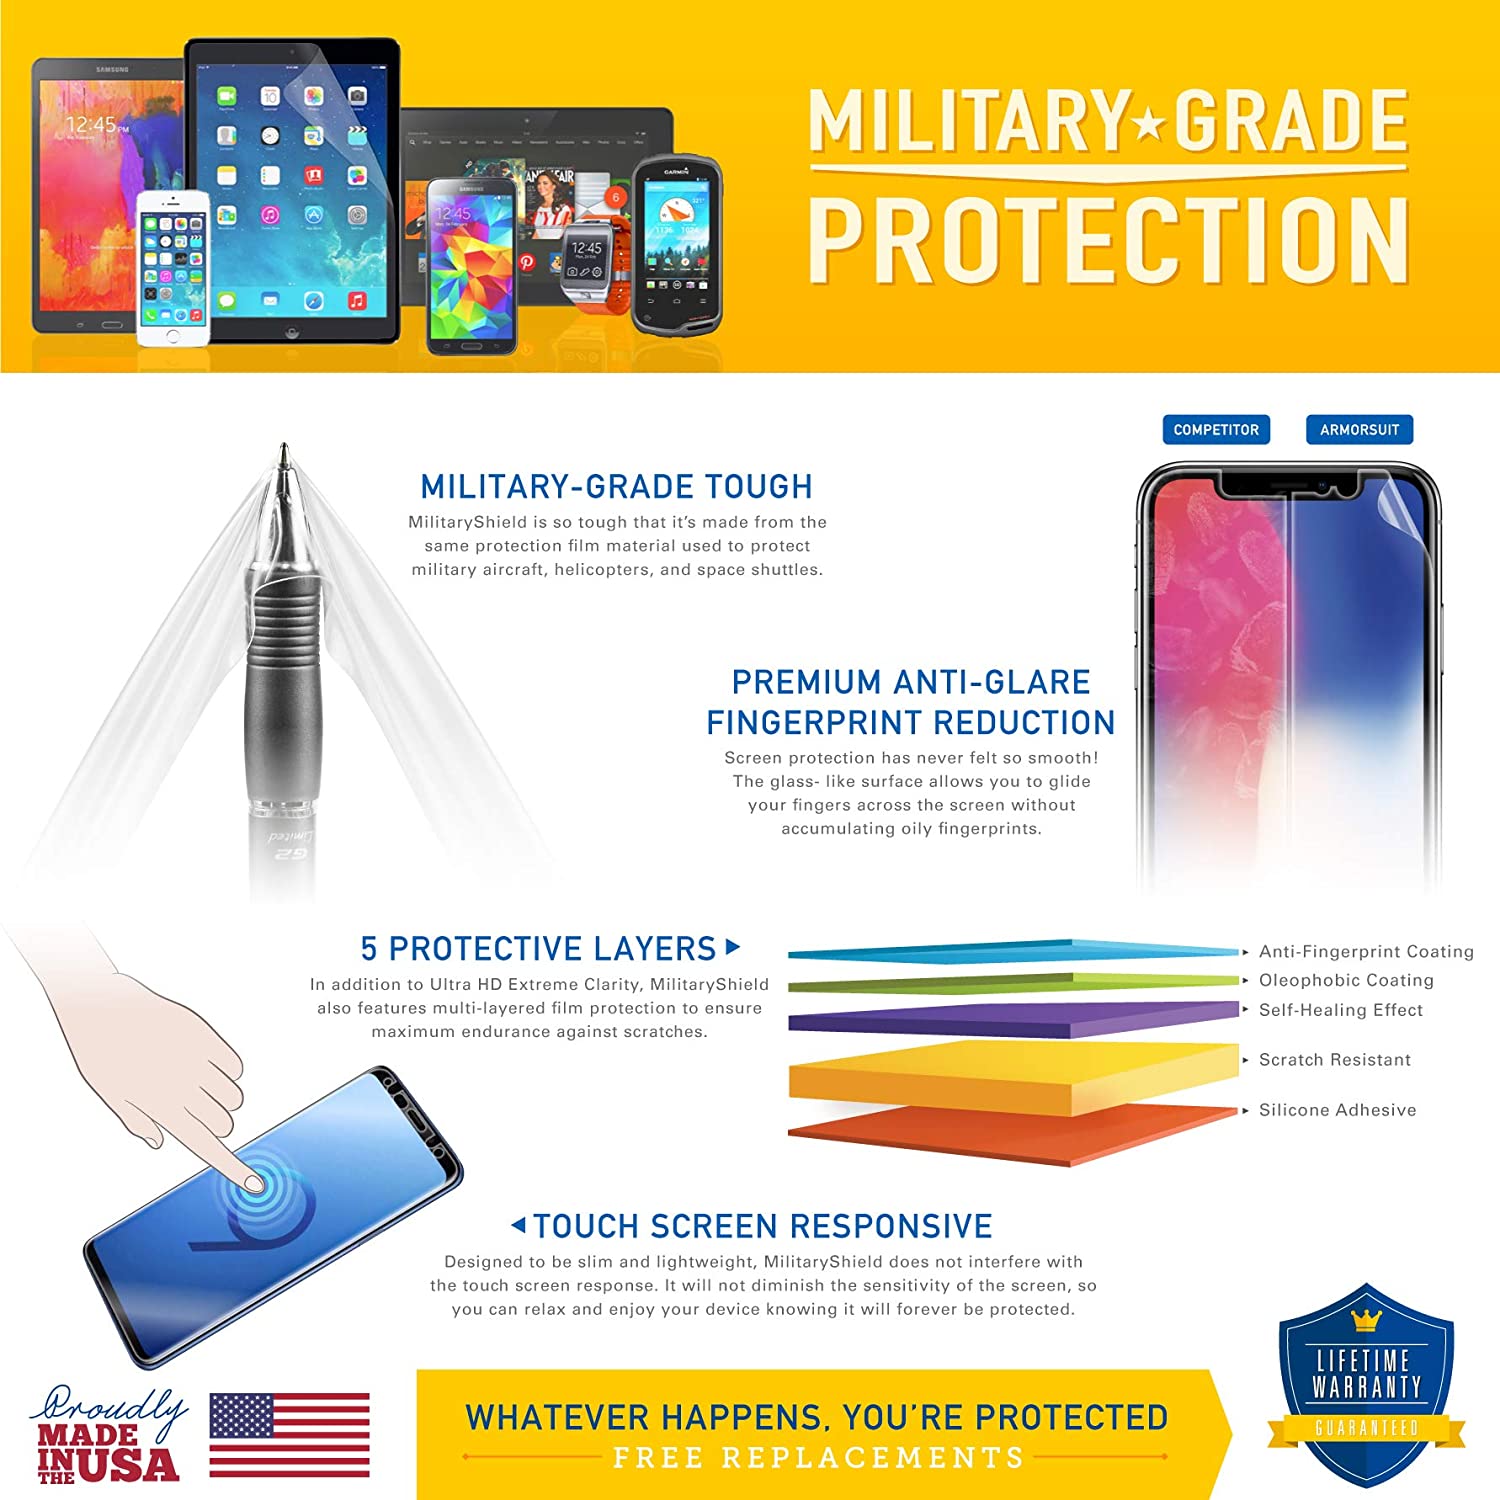 Samsung Galaxy S2 / SII (AT&T U.S. Version) Full Body Skin Protector